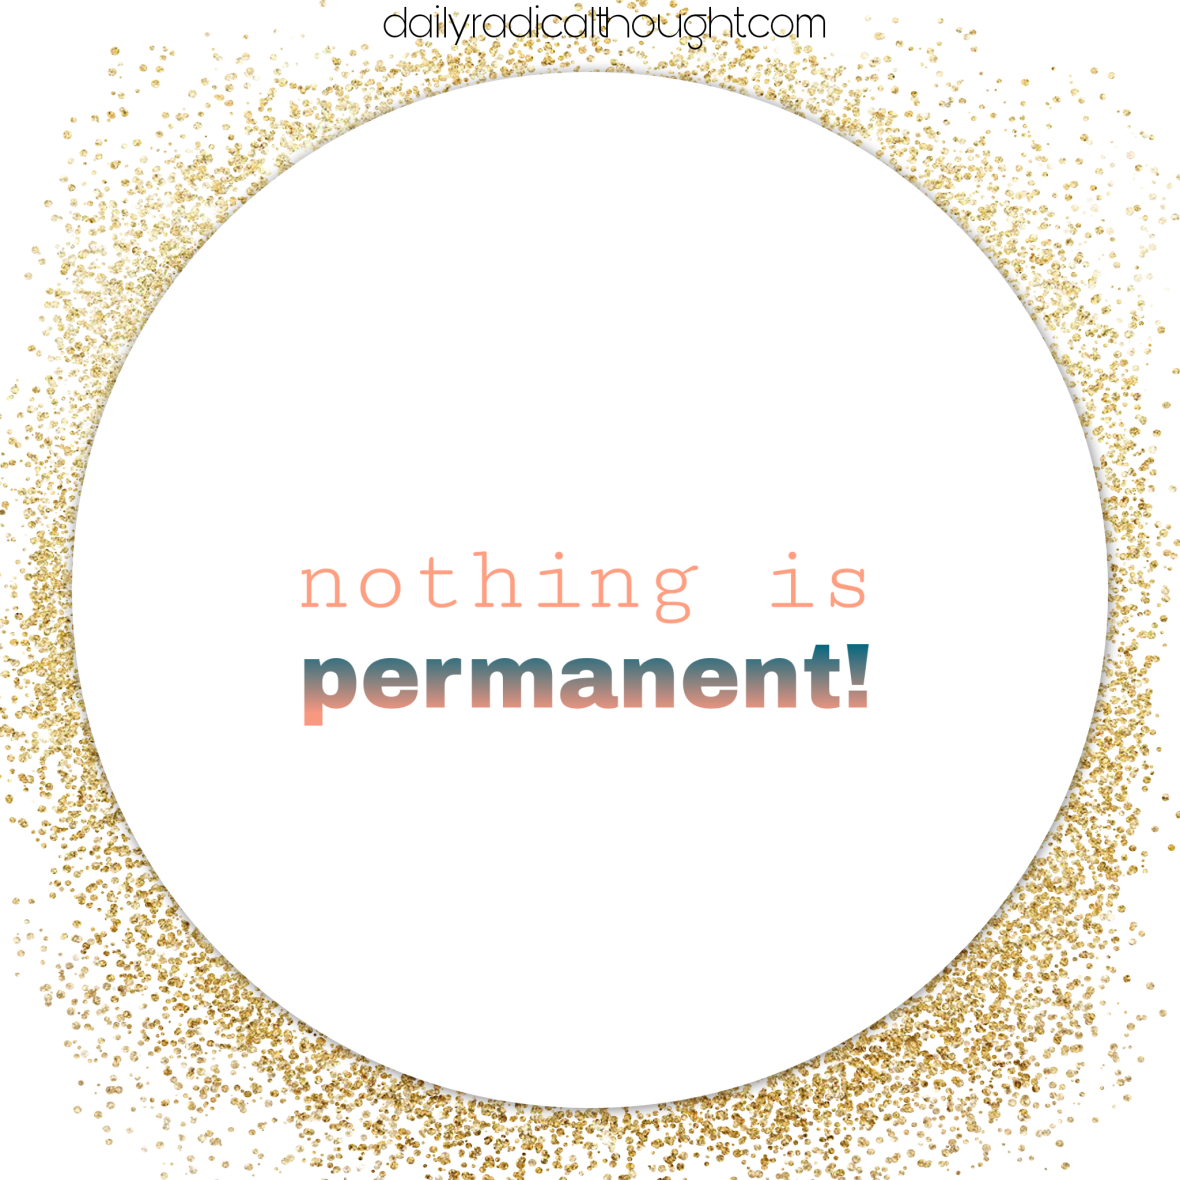 Nothing is permanent, Erin J Bernard, dailyradicalthought.com 